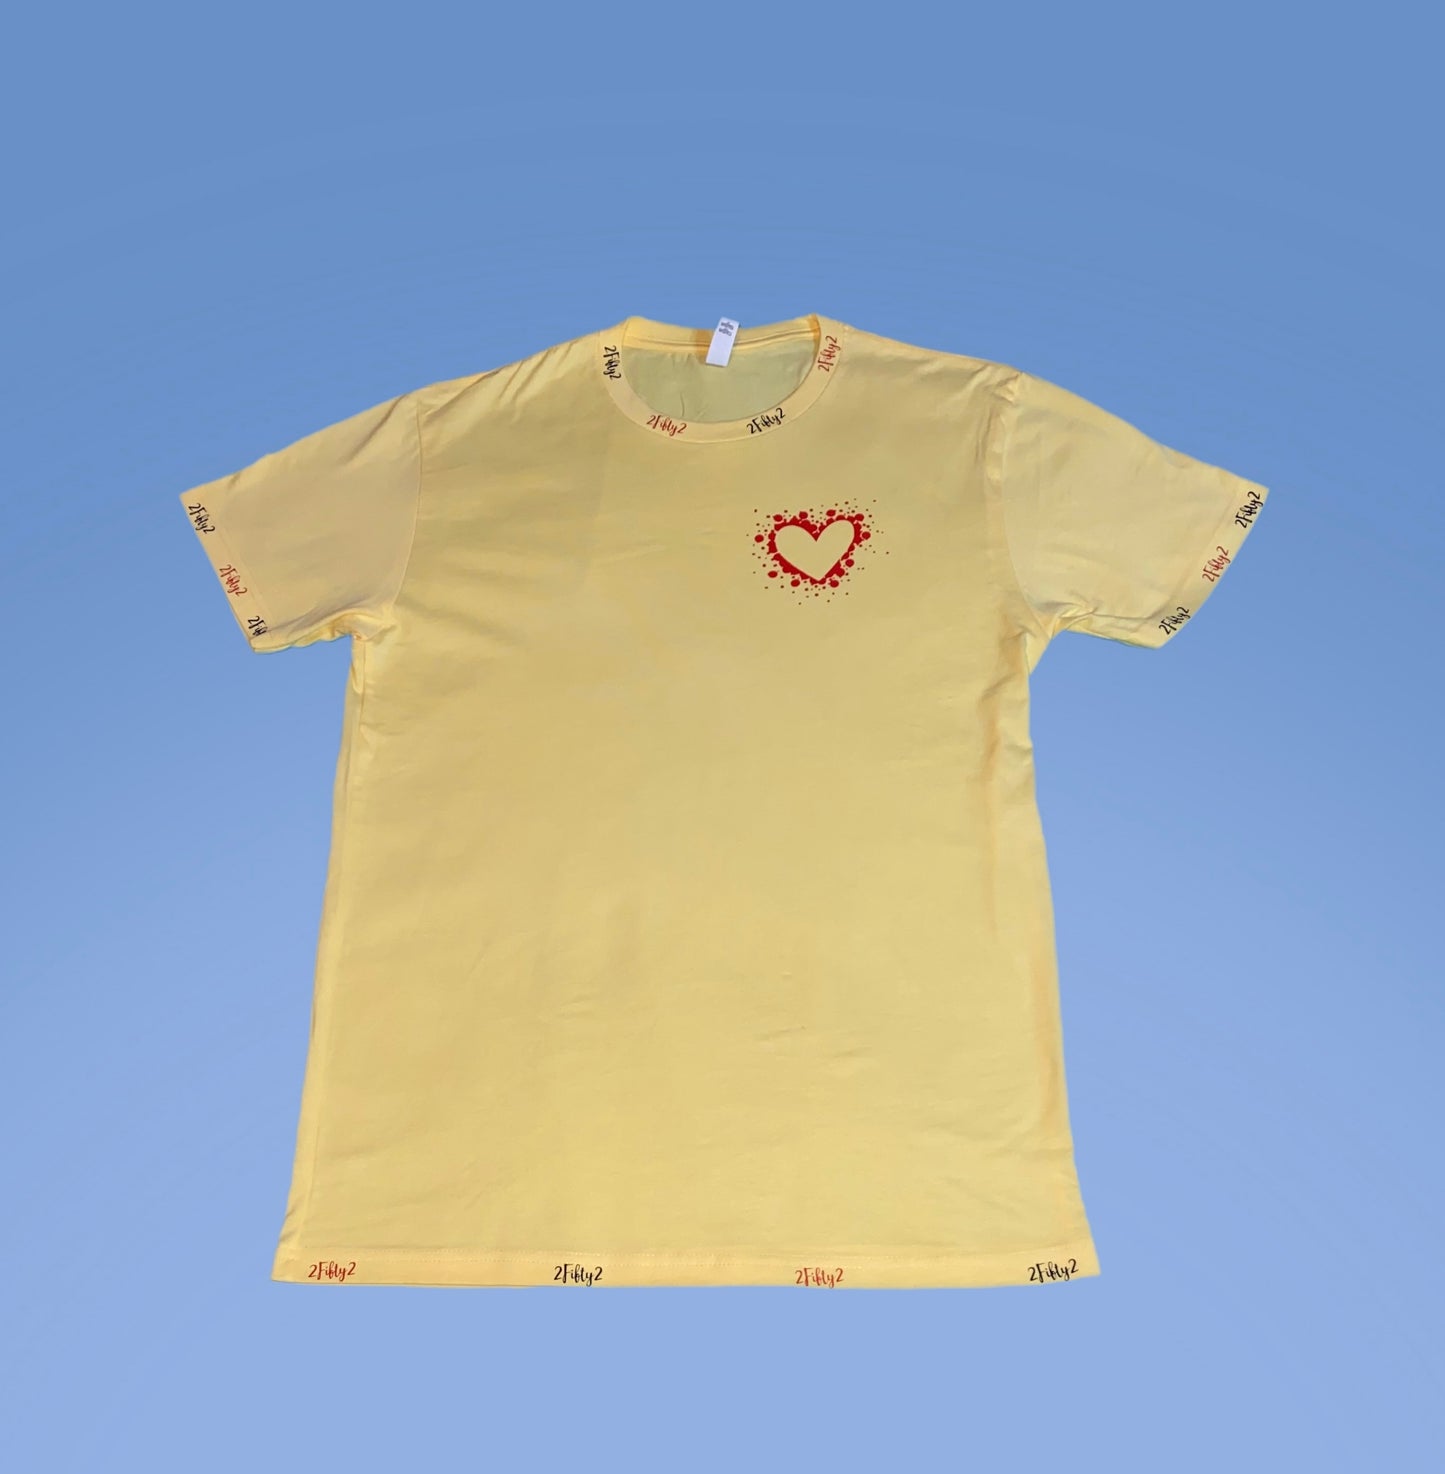 Boys yellow tee shirt - 2fifty2